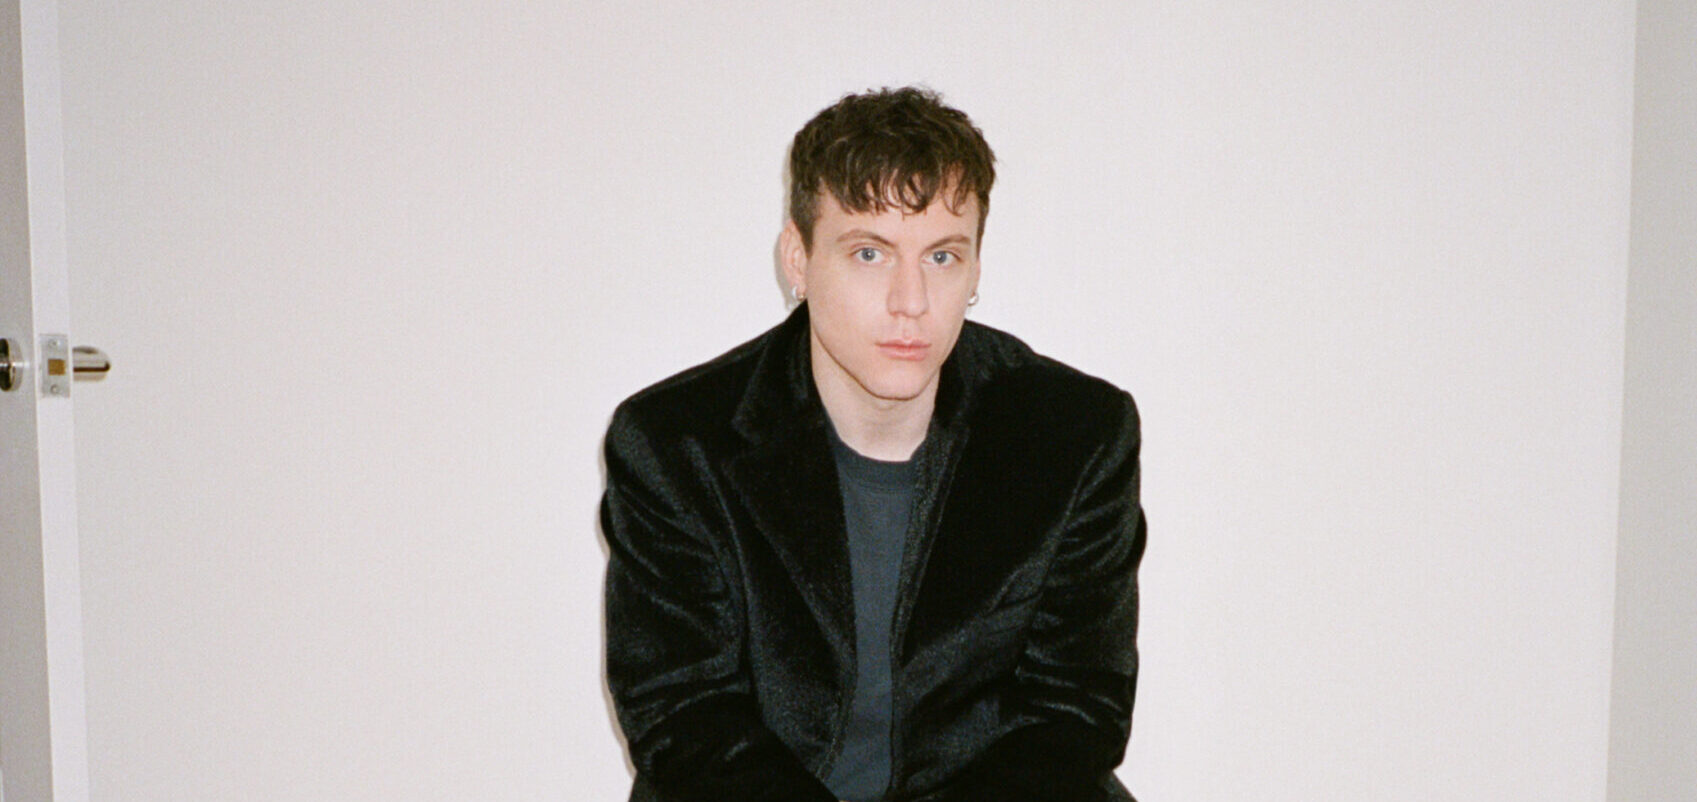 Portrait of Sean McGrir, with a contemplative gaze, wearing a black velvet blazer over a casual shirt, set against a clean, white background.